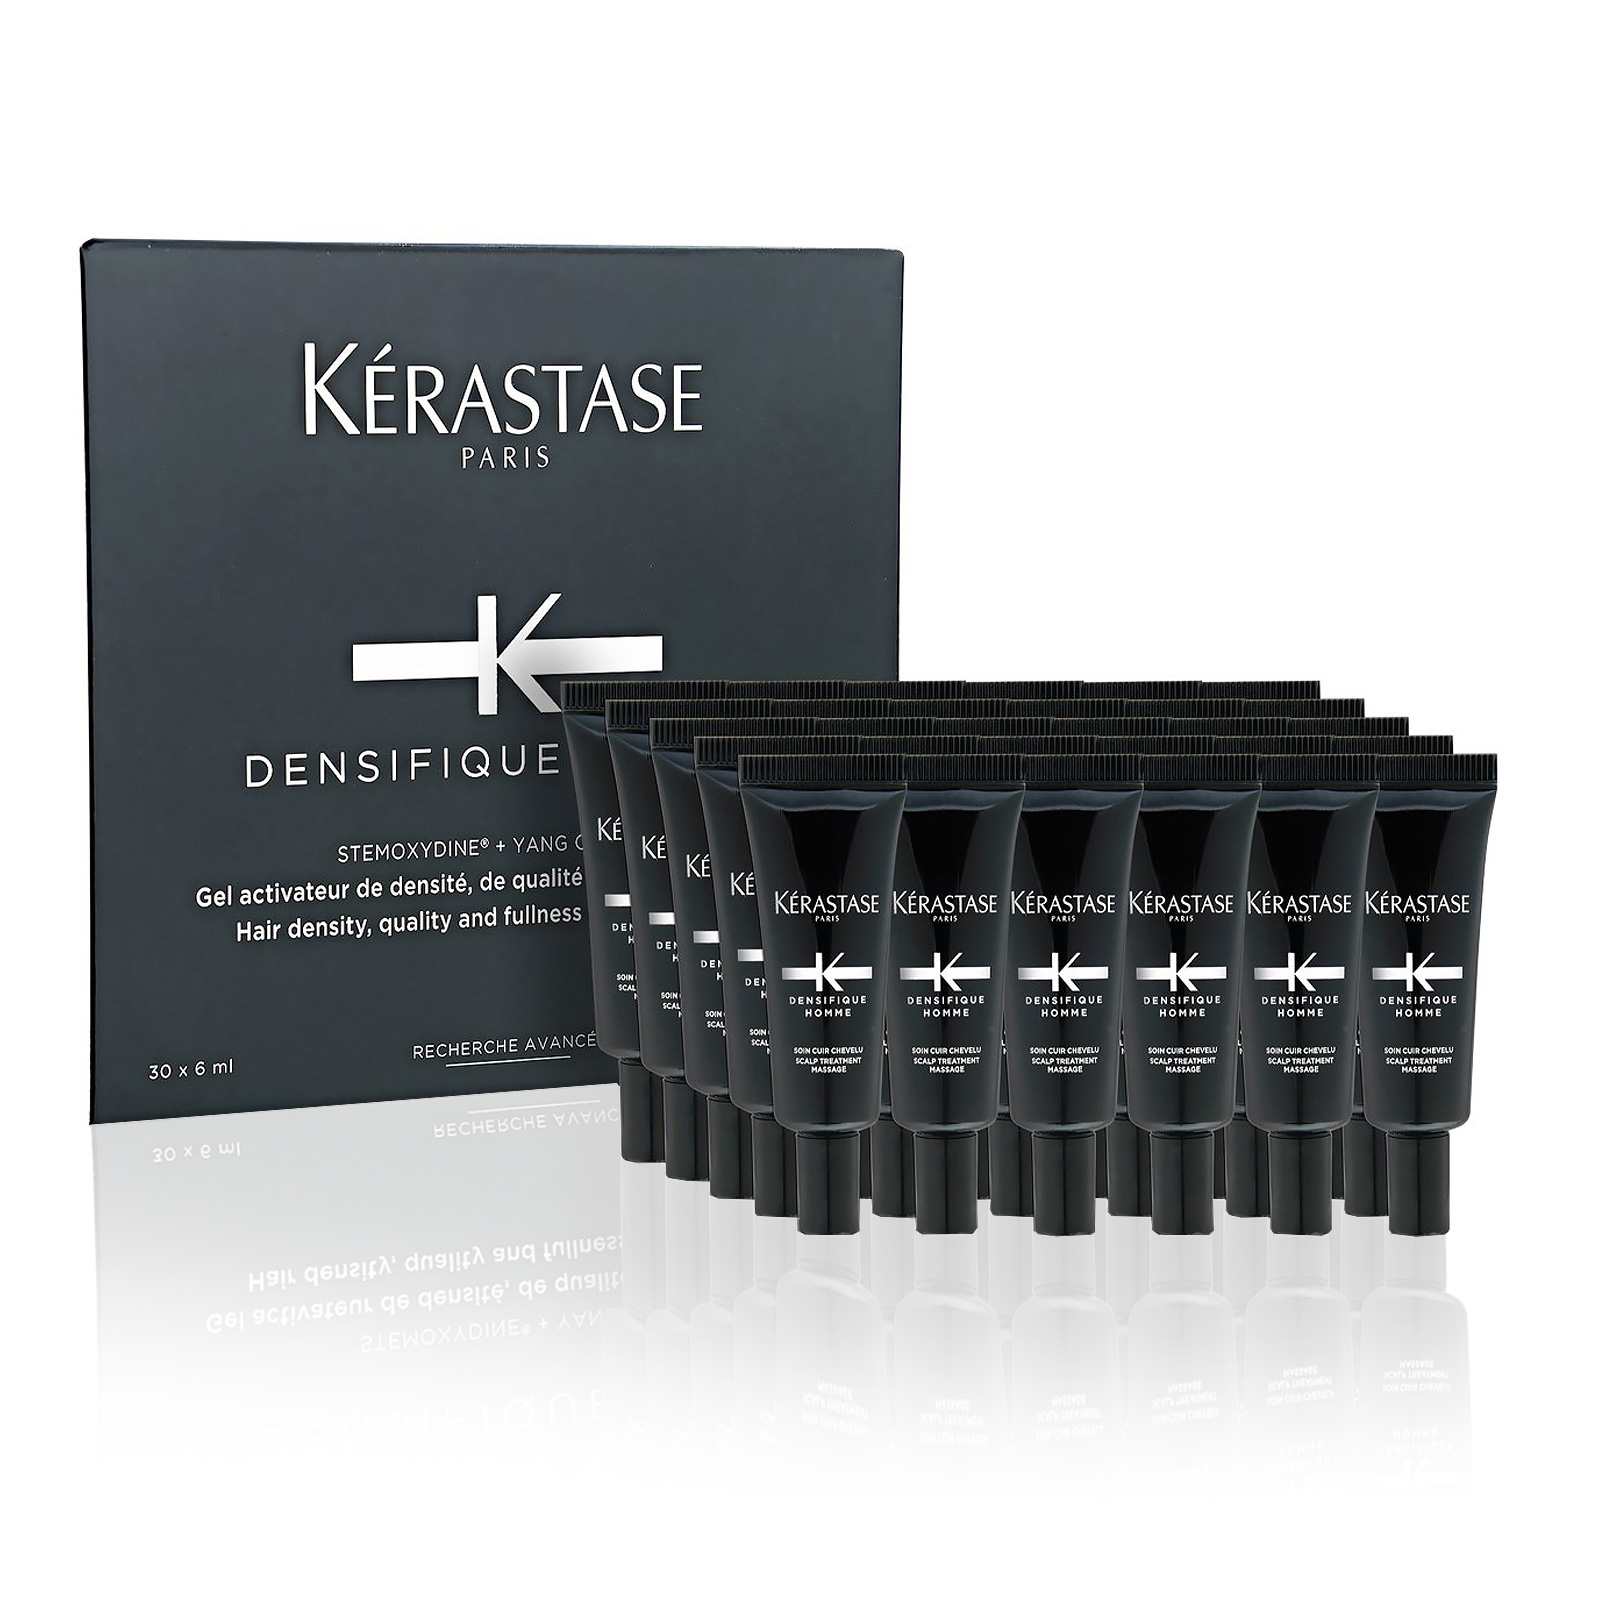 Kérastase Paris Densifique Homme Hair Density, Quality and Activator Program30 x 6 ml x 0.2 AKB